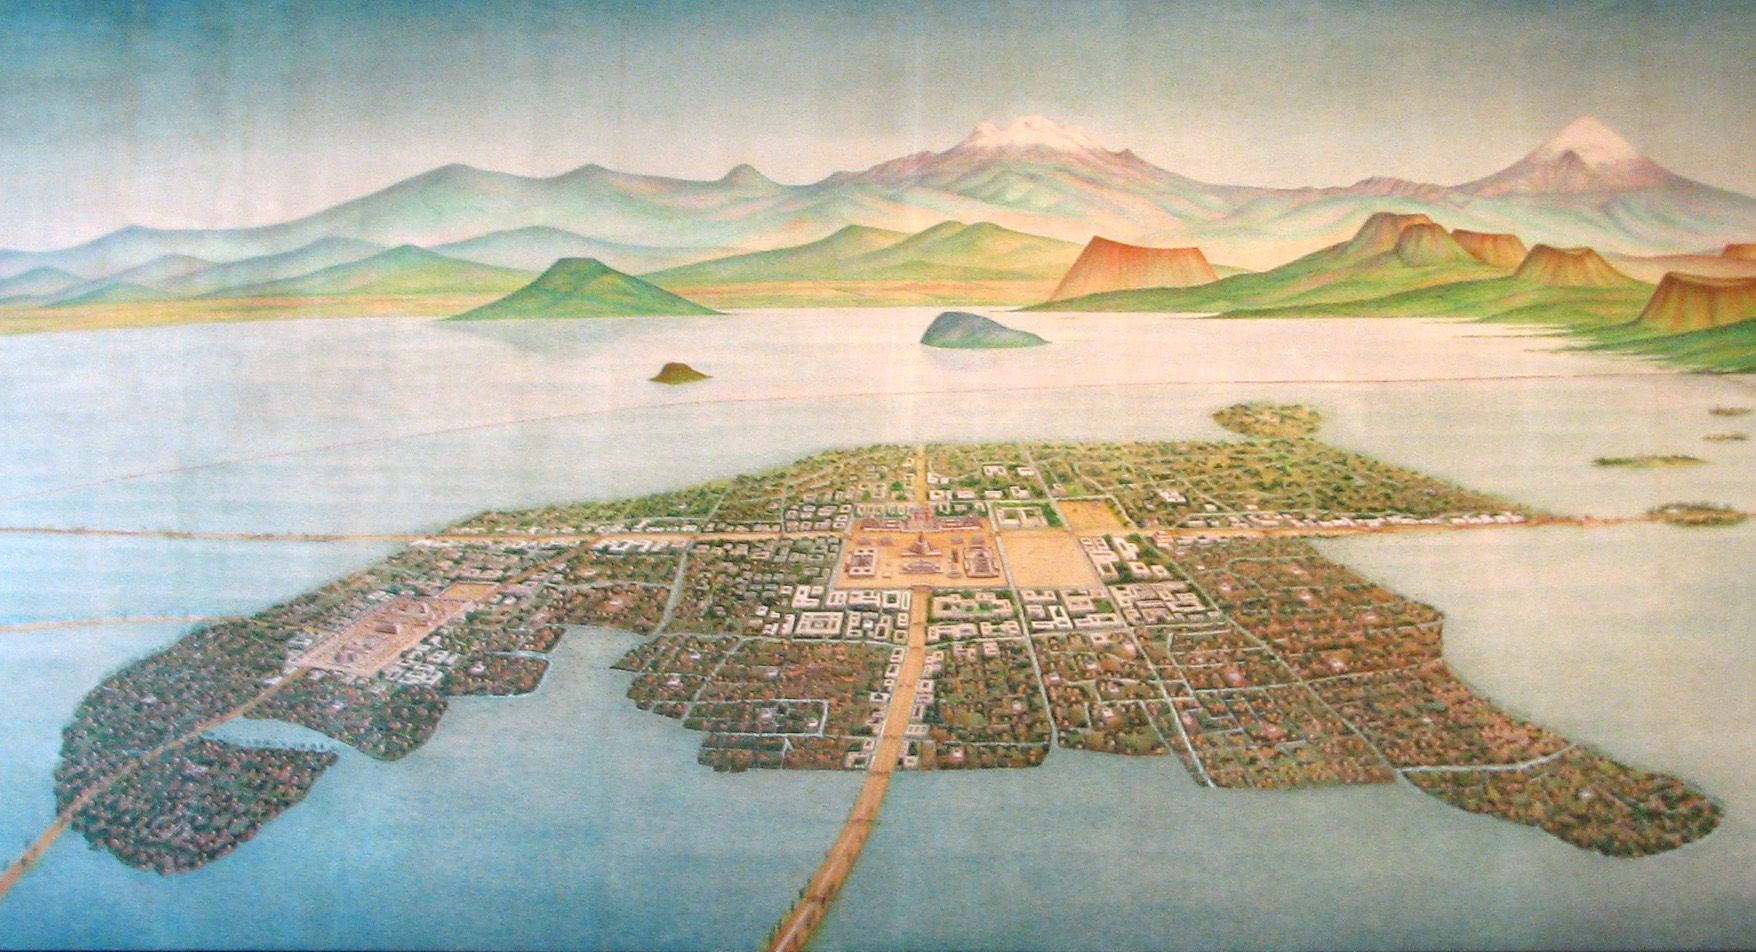 The Aztec Capital City of Tenochtitlan at Mexico City